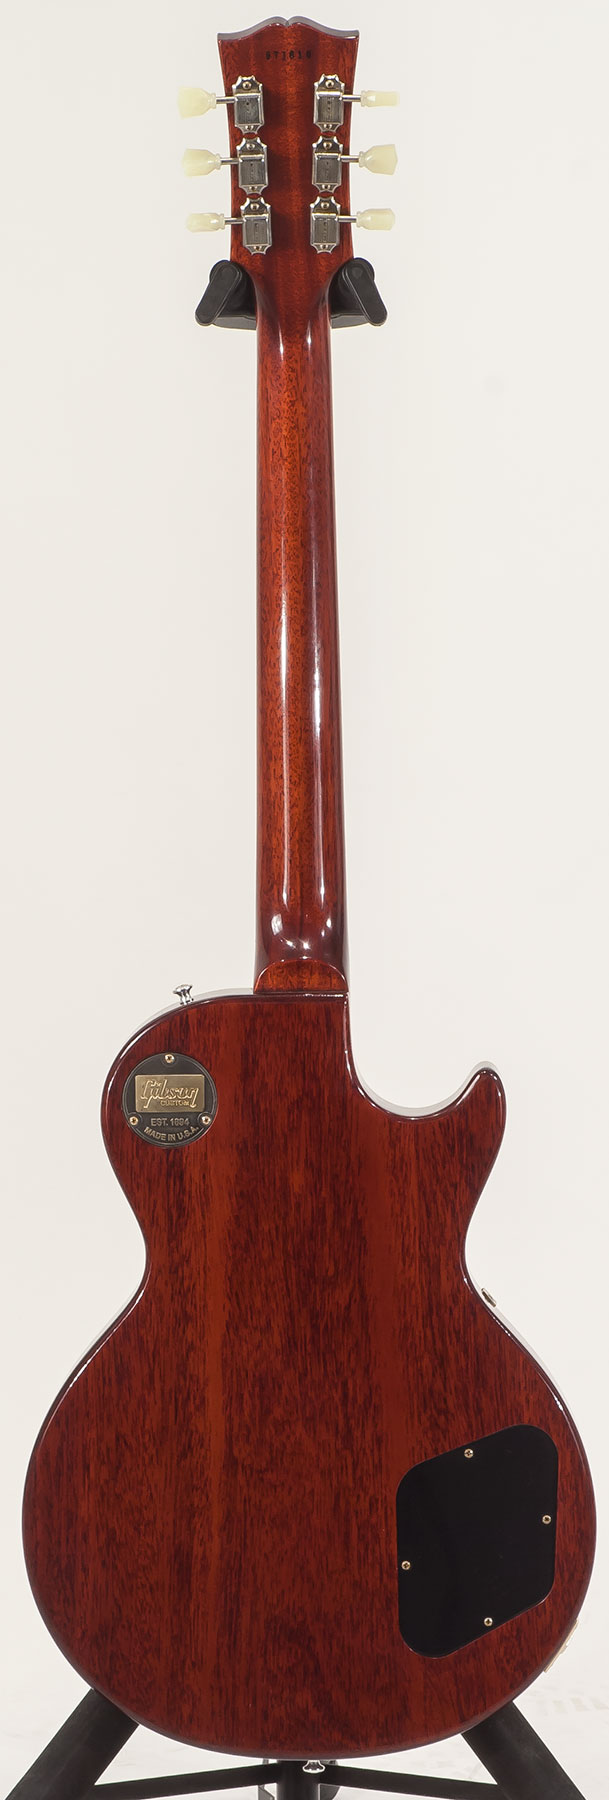 Gibson Custom Shop M2m Les Paul Standard 1959 Lh Gaucher Ltd 2h Ht Rw #971610 - Vos Washed Cherry - Left-handed electric guitar - Variation 1